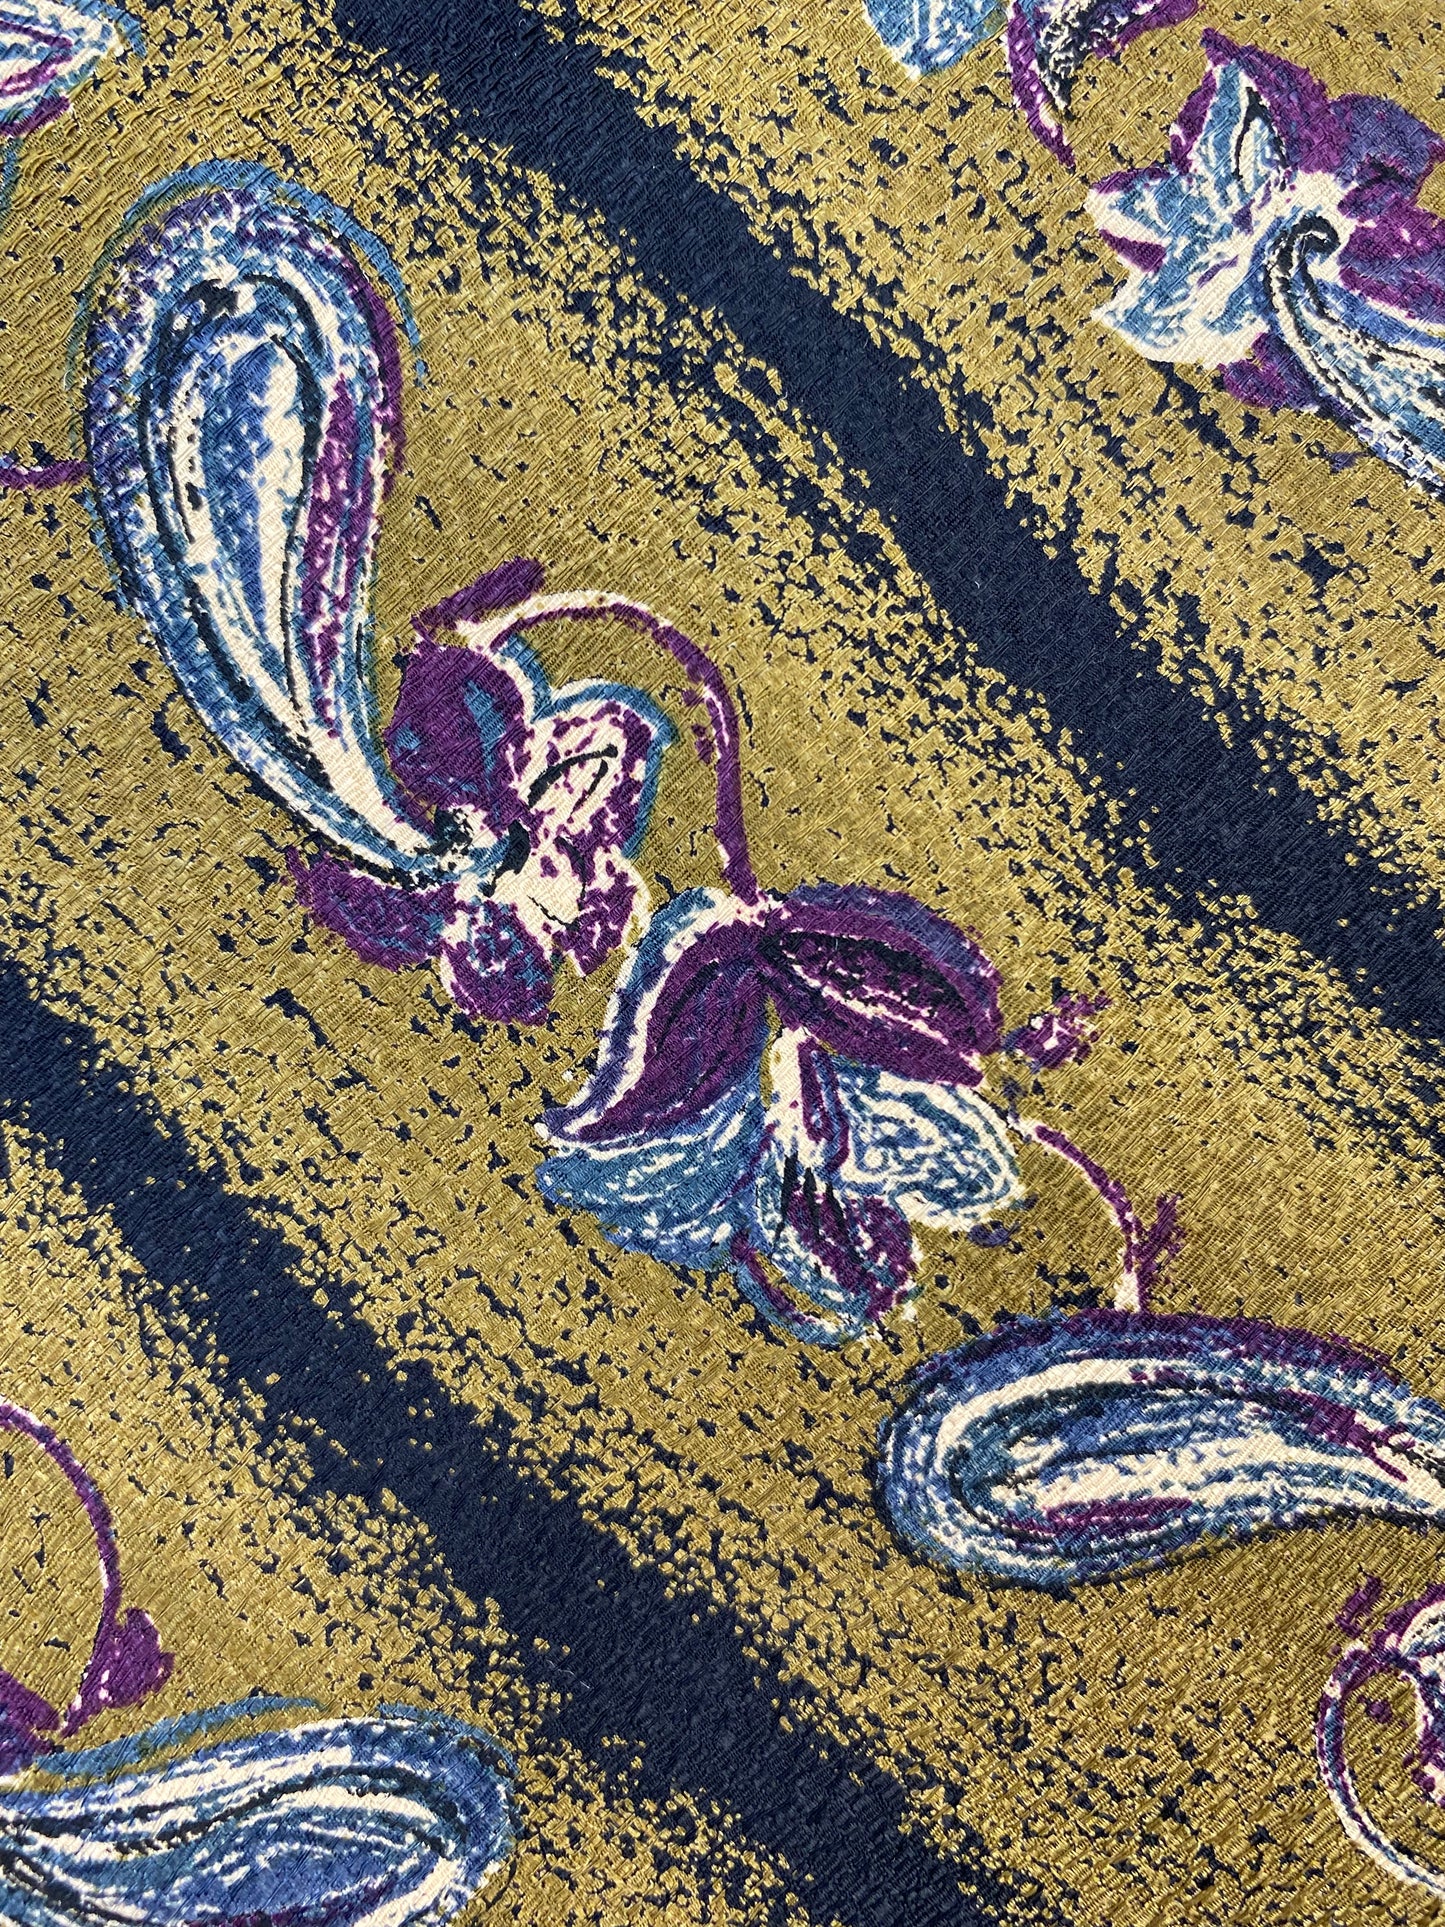 Close-up of: 90s Deadstock Silk Necktie, Men's Vintage Gold/Purple Diagonal Stripe Floral Paisley Pattern Tie, NOS